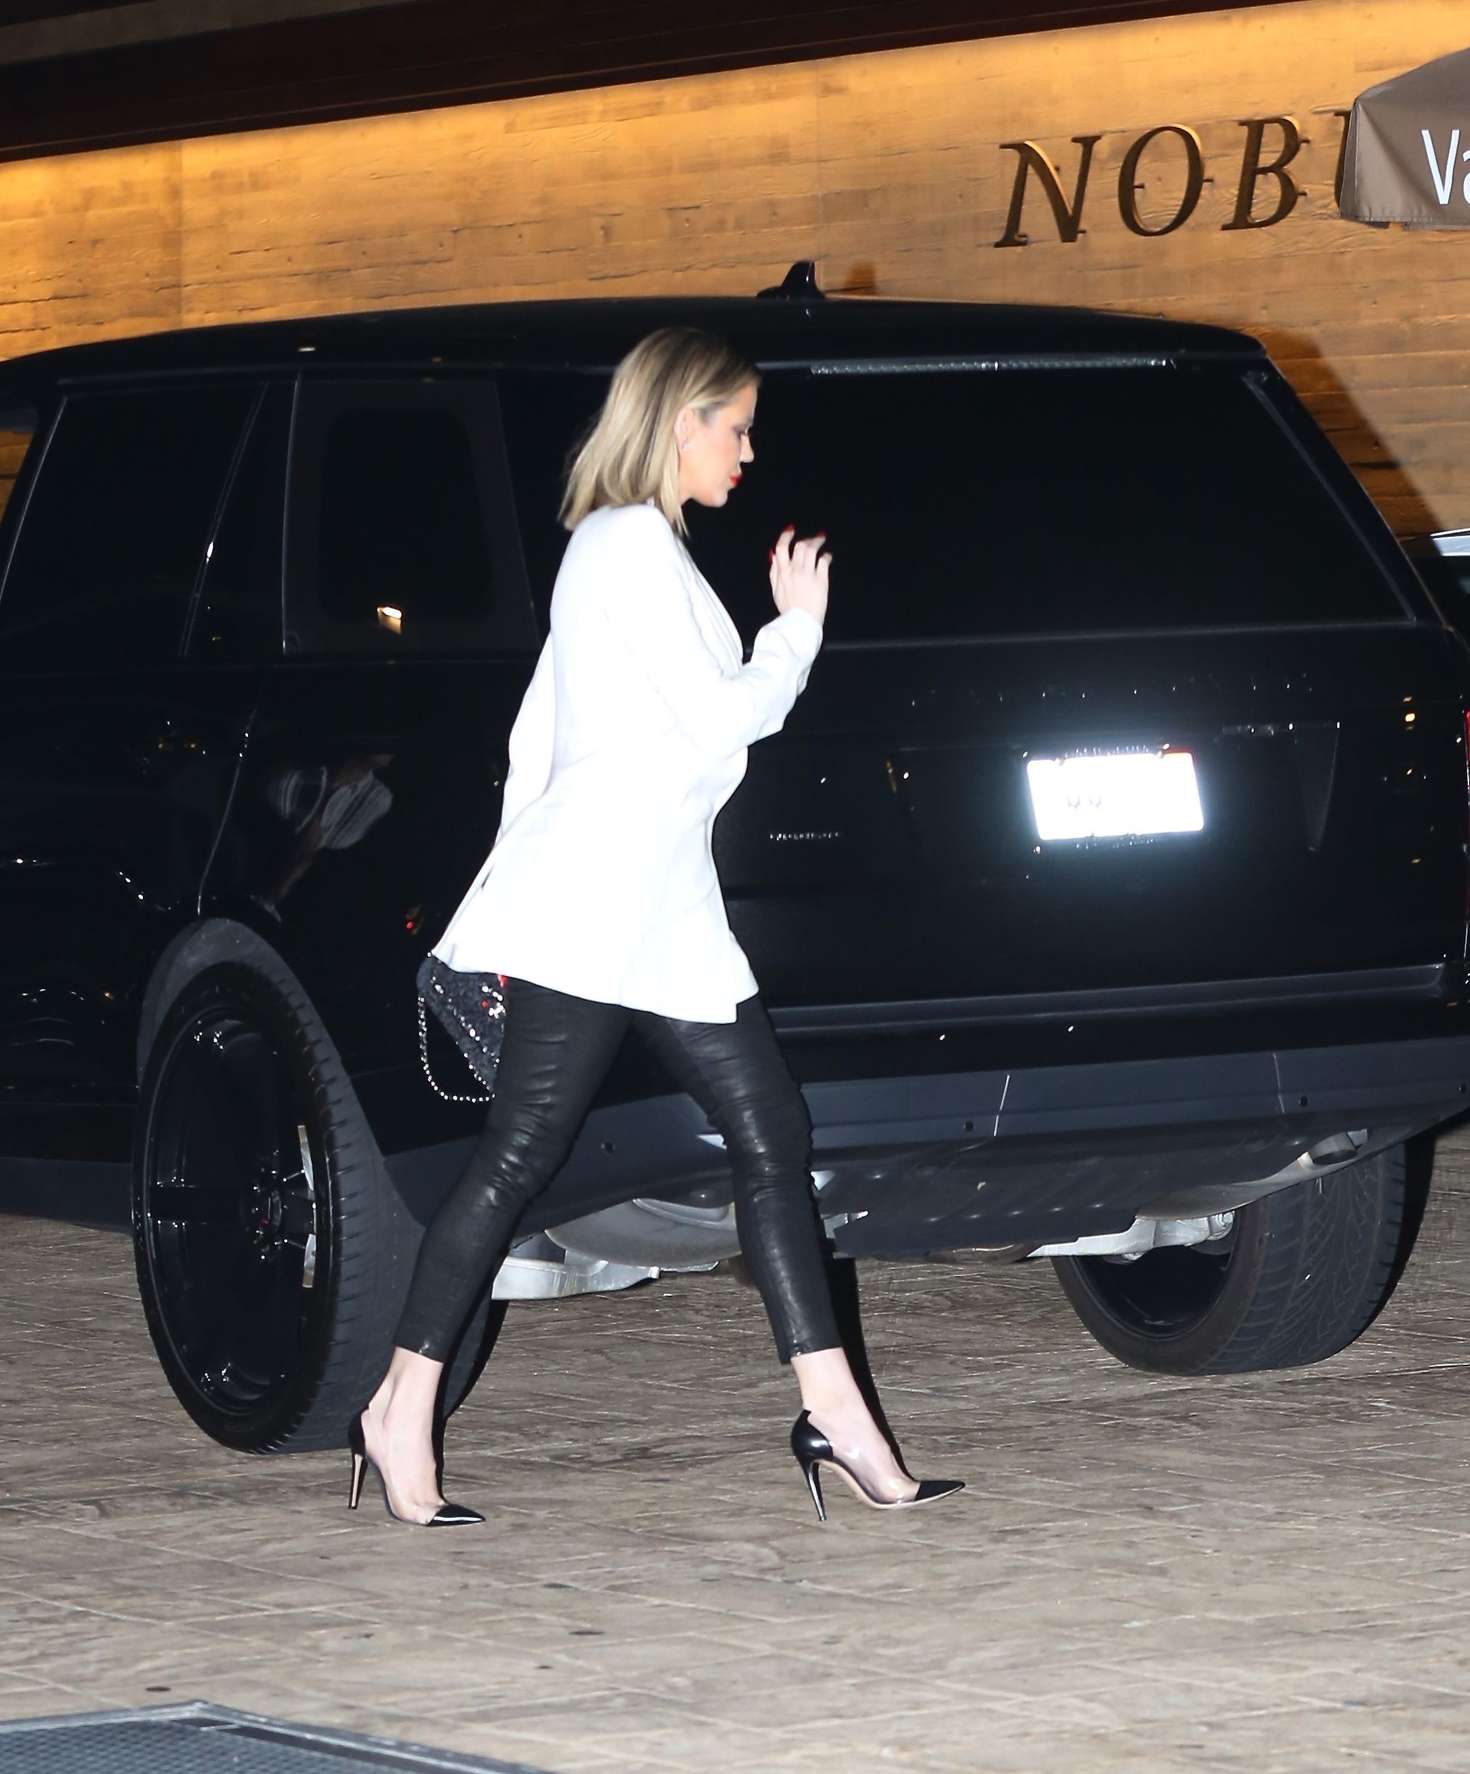 Khloe Kardashian leaving the Nobu Restaurant